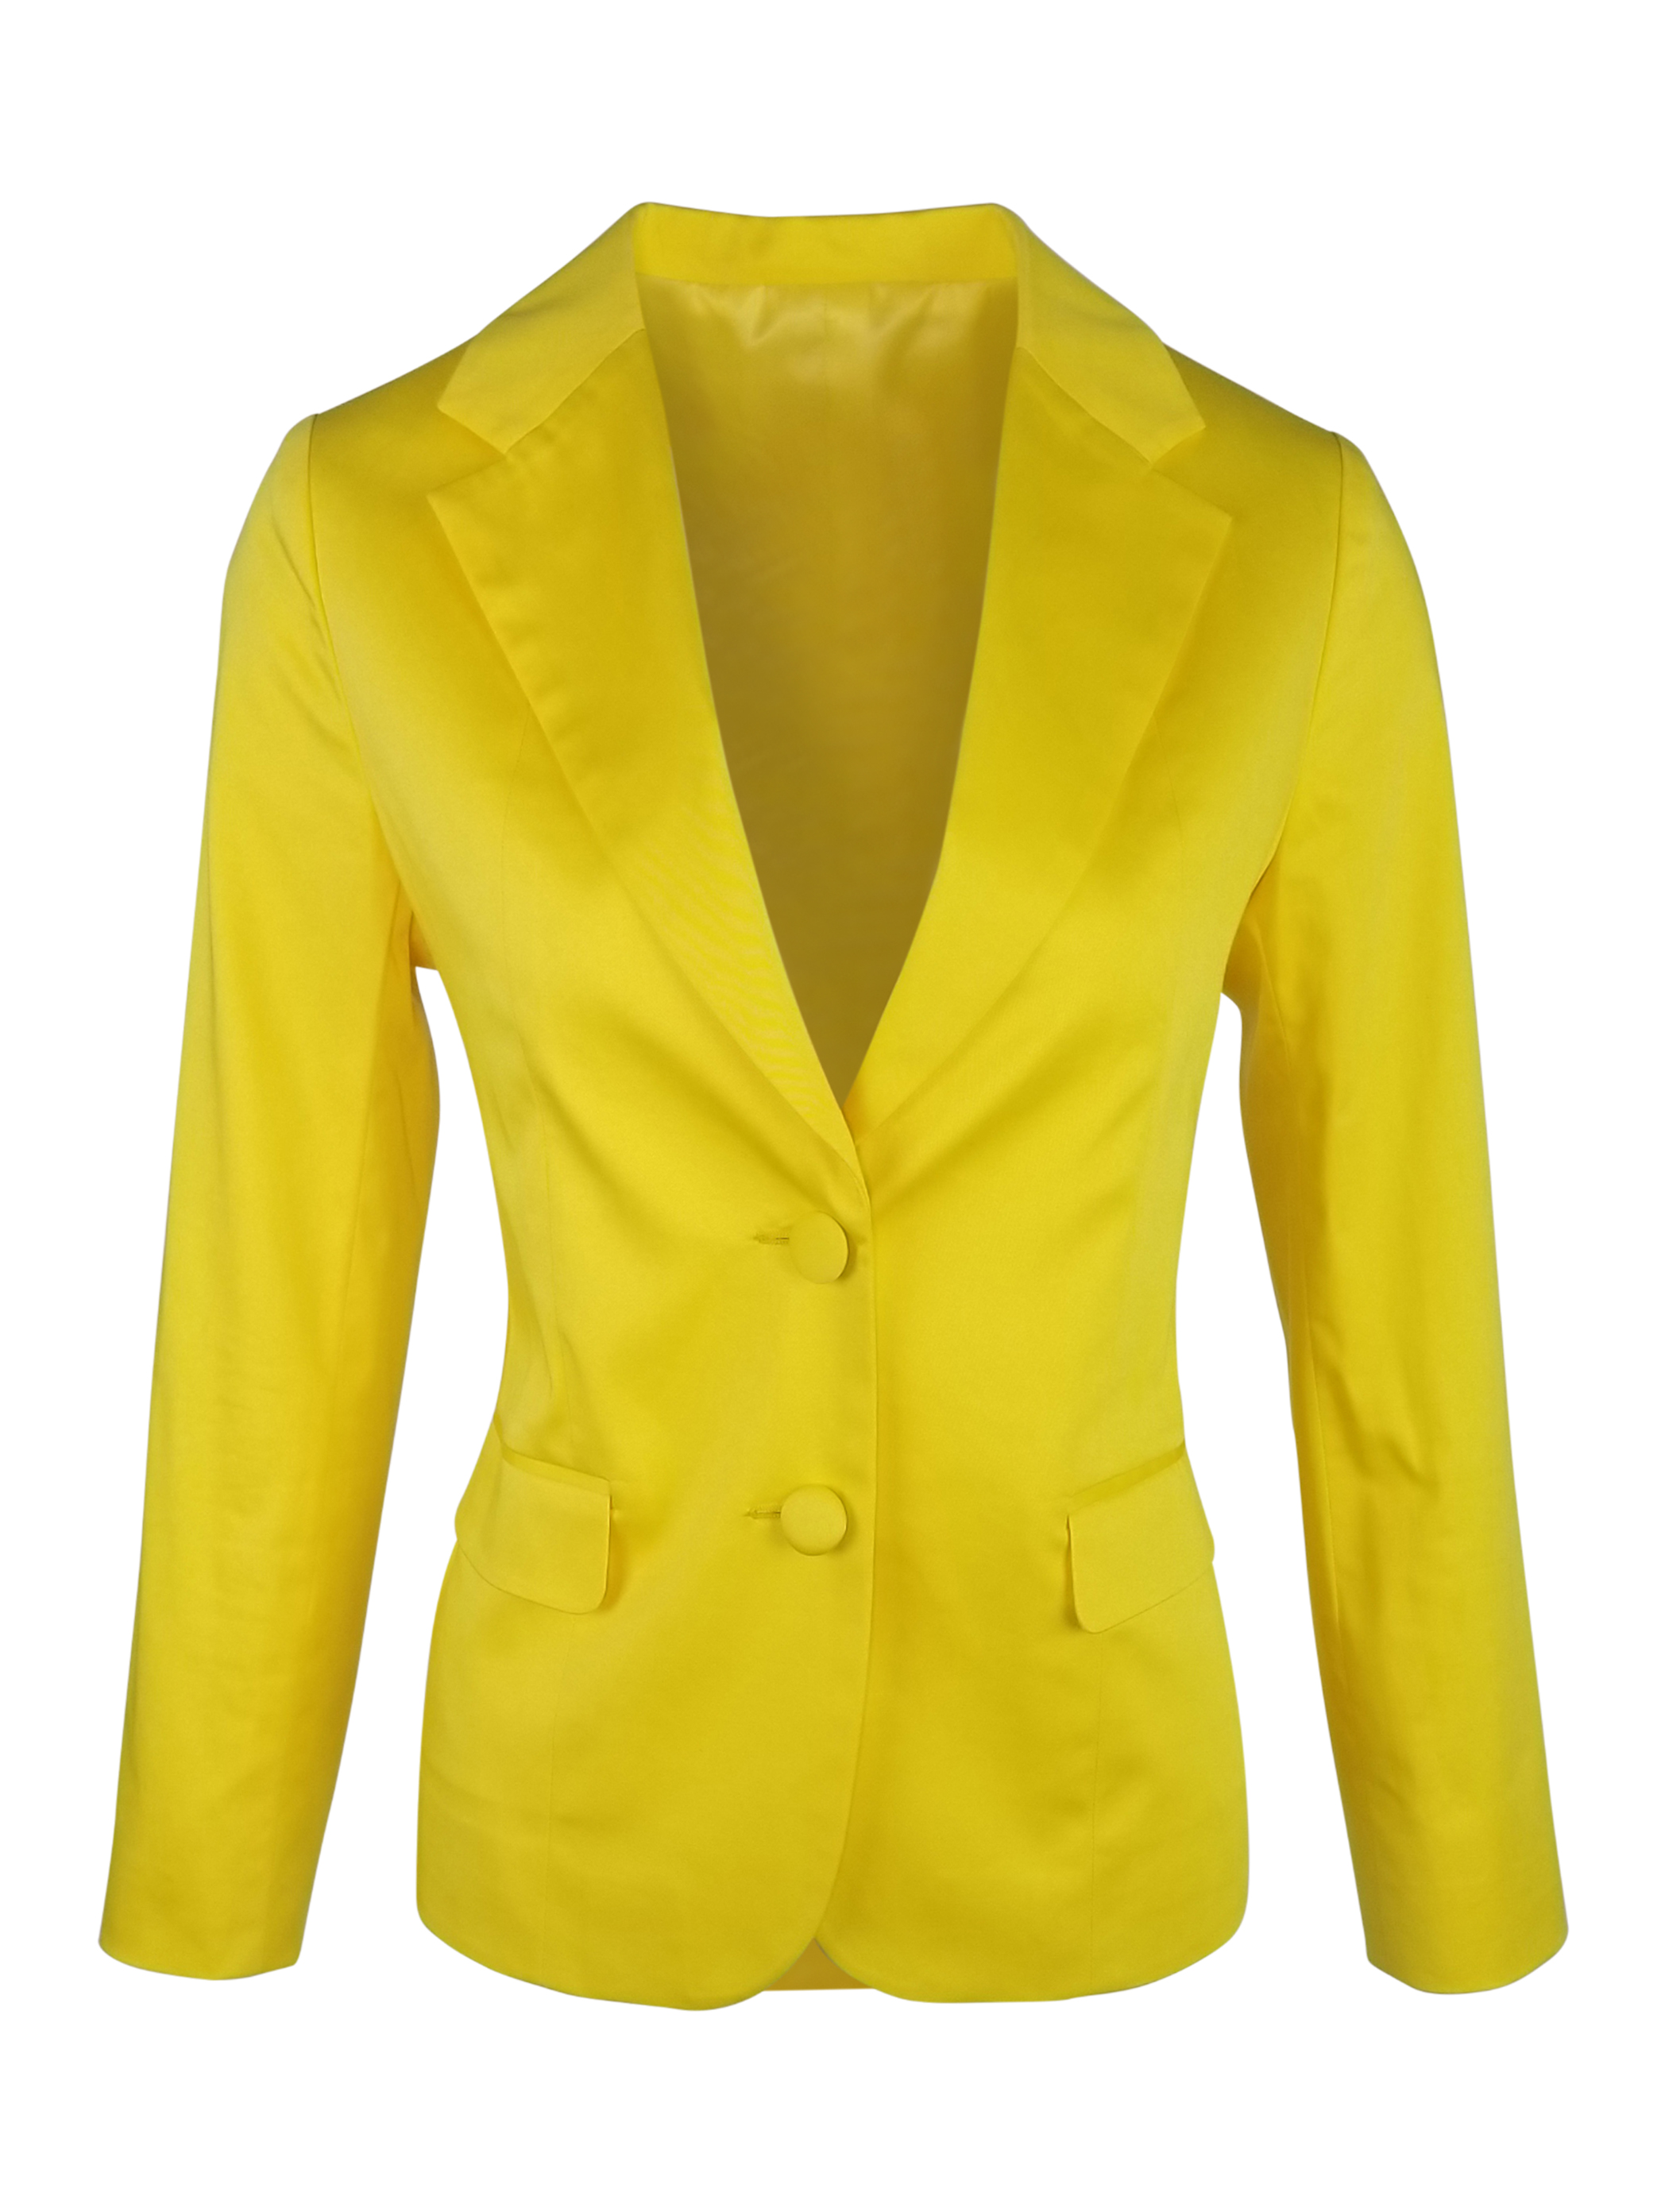 Women's Cotton Jacket - Yellow - Uniform Edit